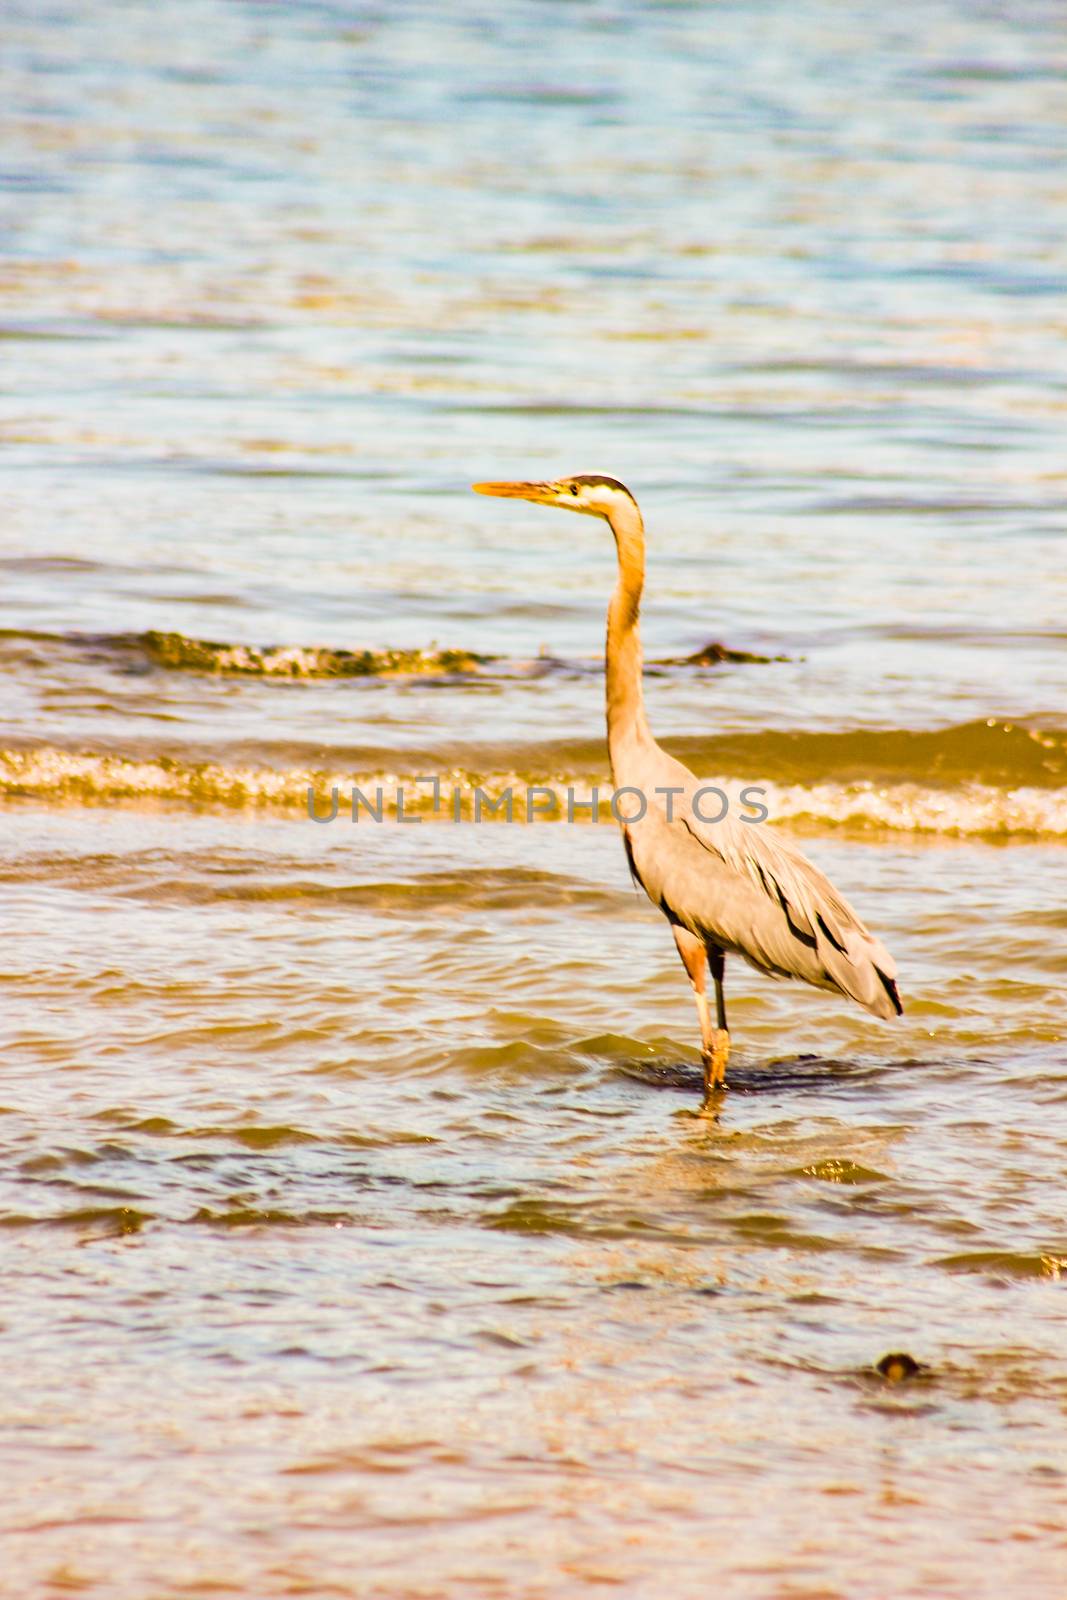 Great Blue Heron On A Gulf Coast Beach With Waves by mynewturtle1